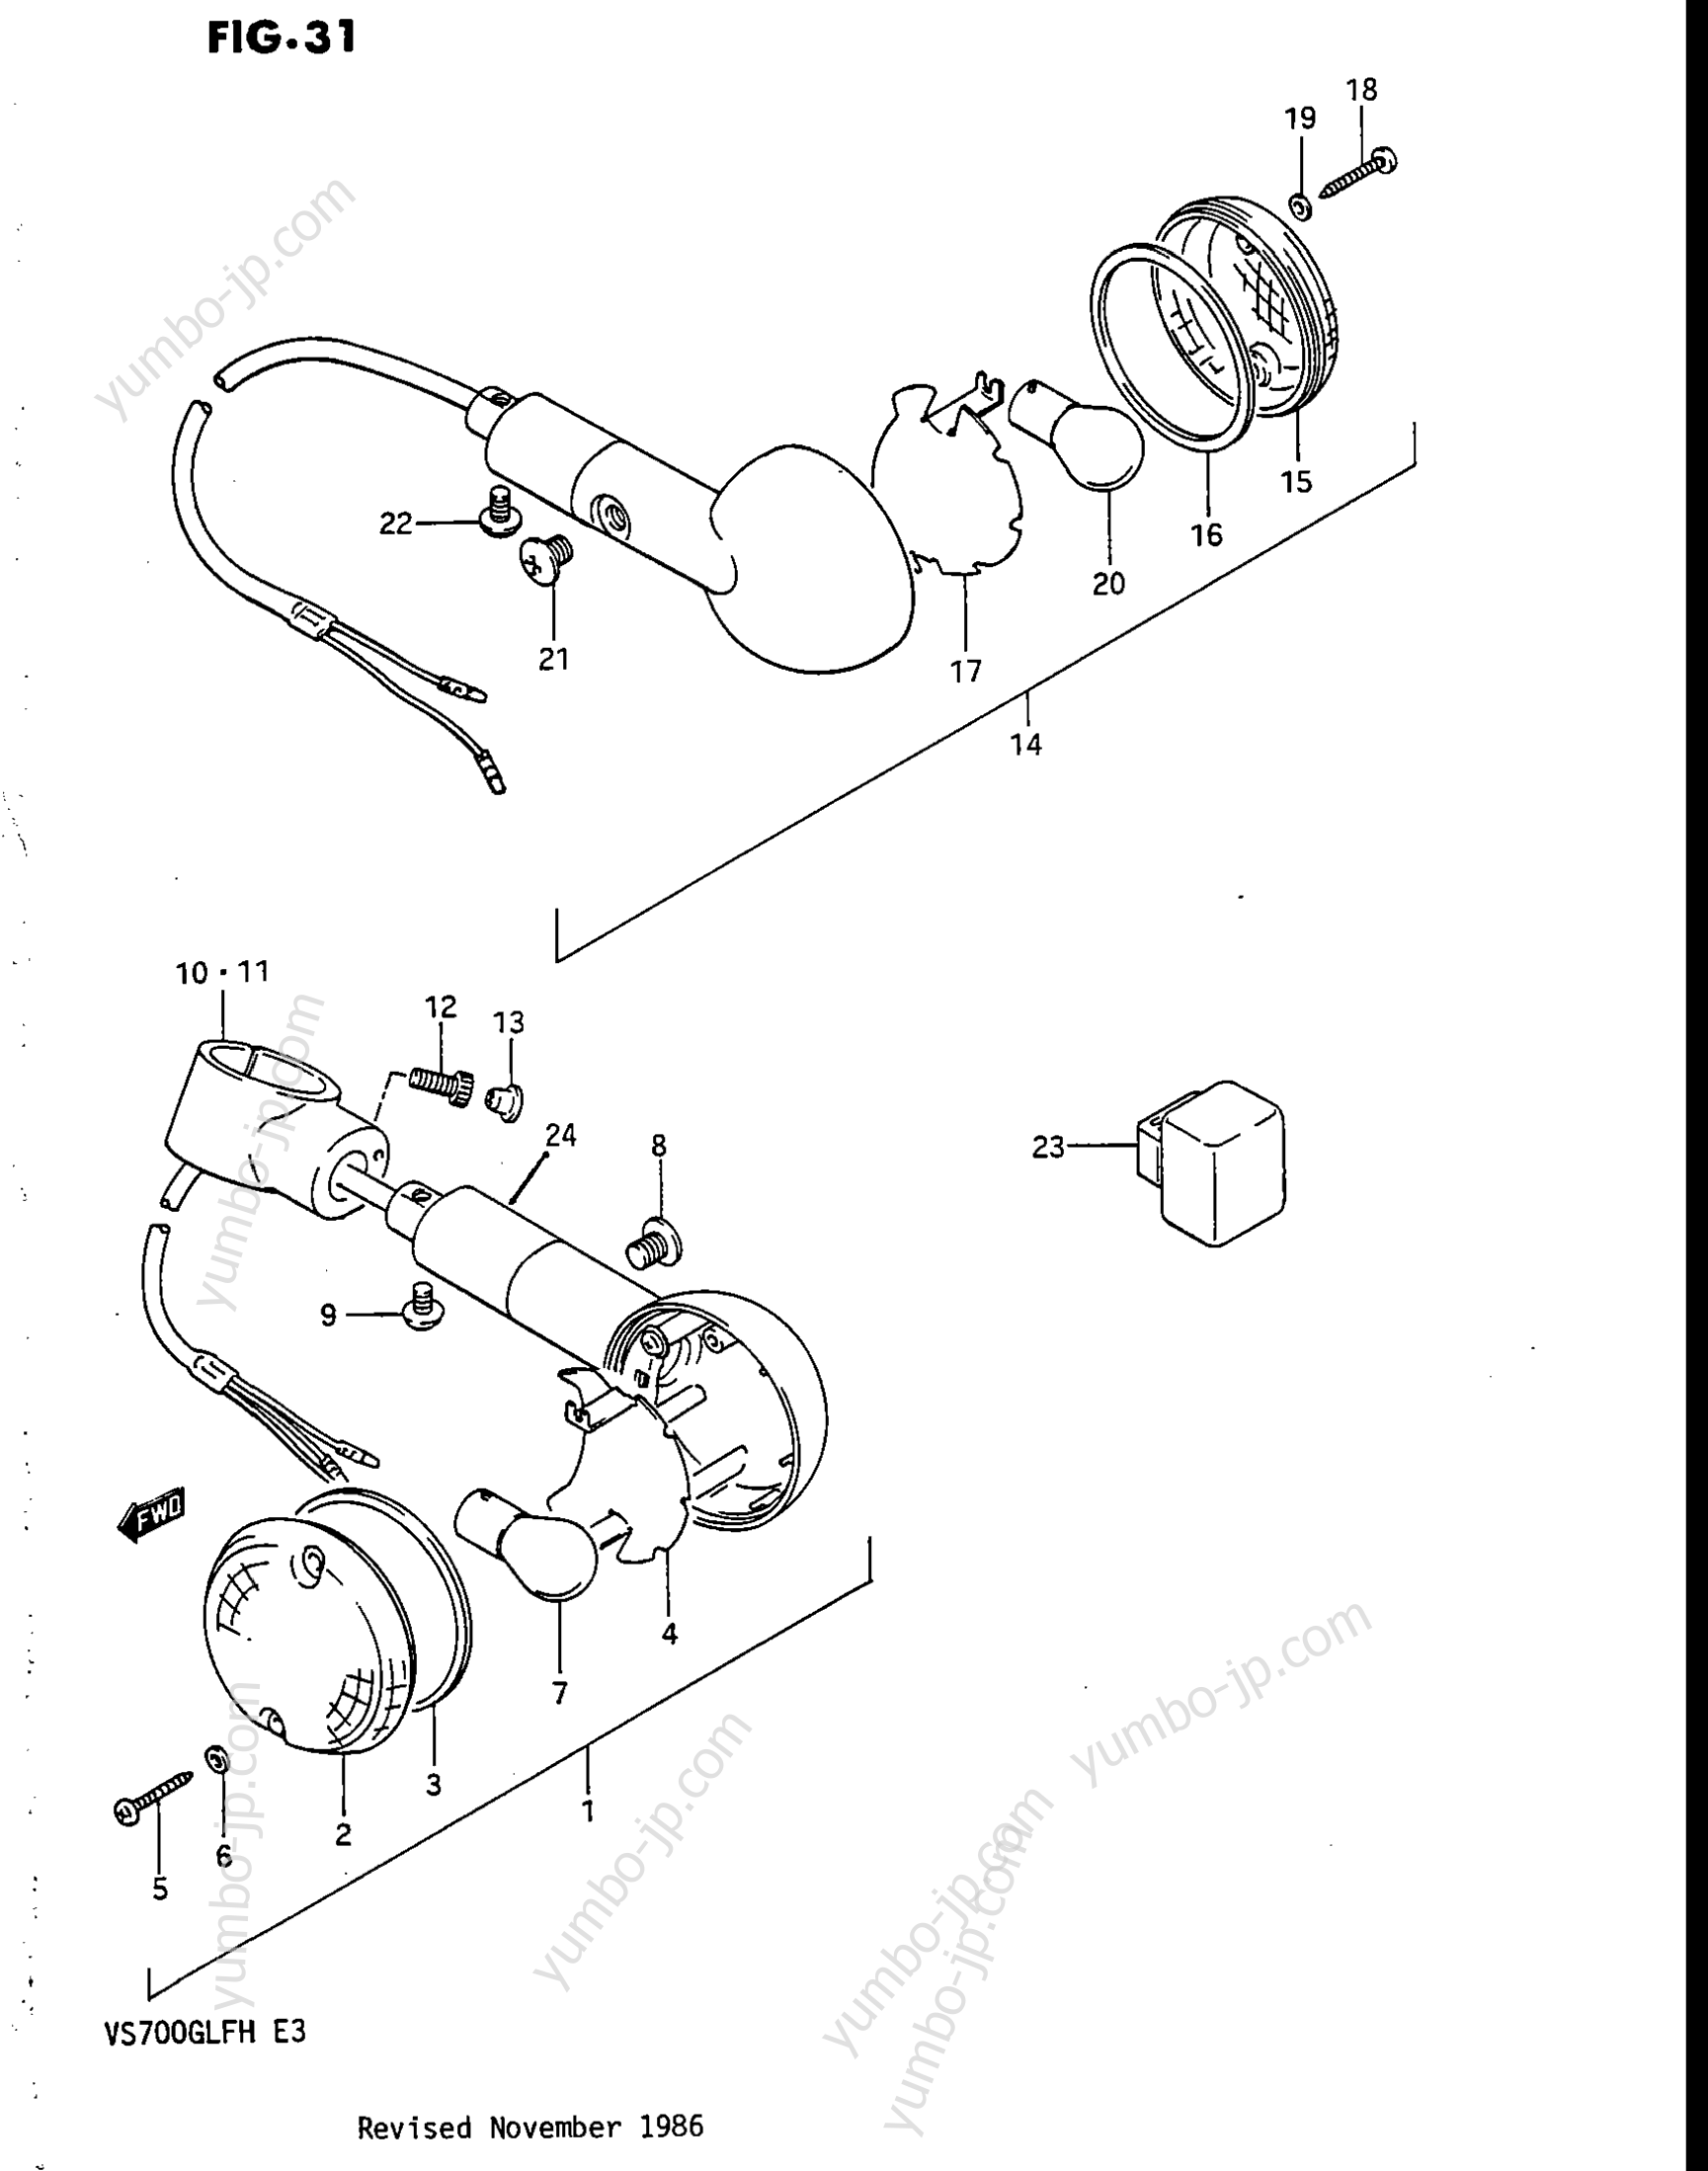 TURN SIGNAL LAMP for motorcycles SUZUKI Intruder (VS700GLF) 1987 year